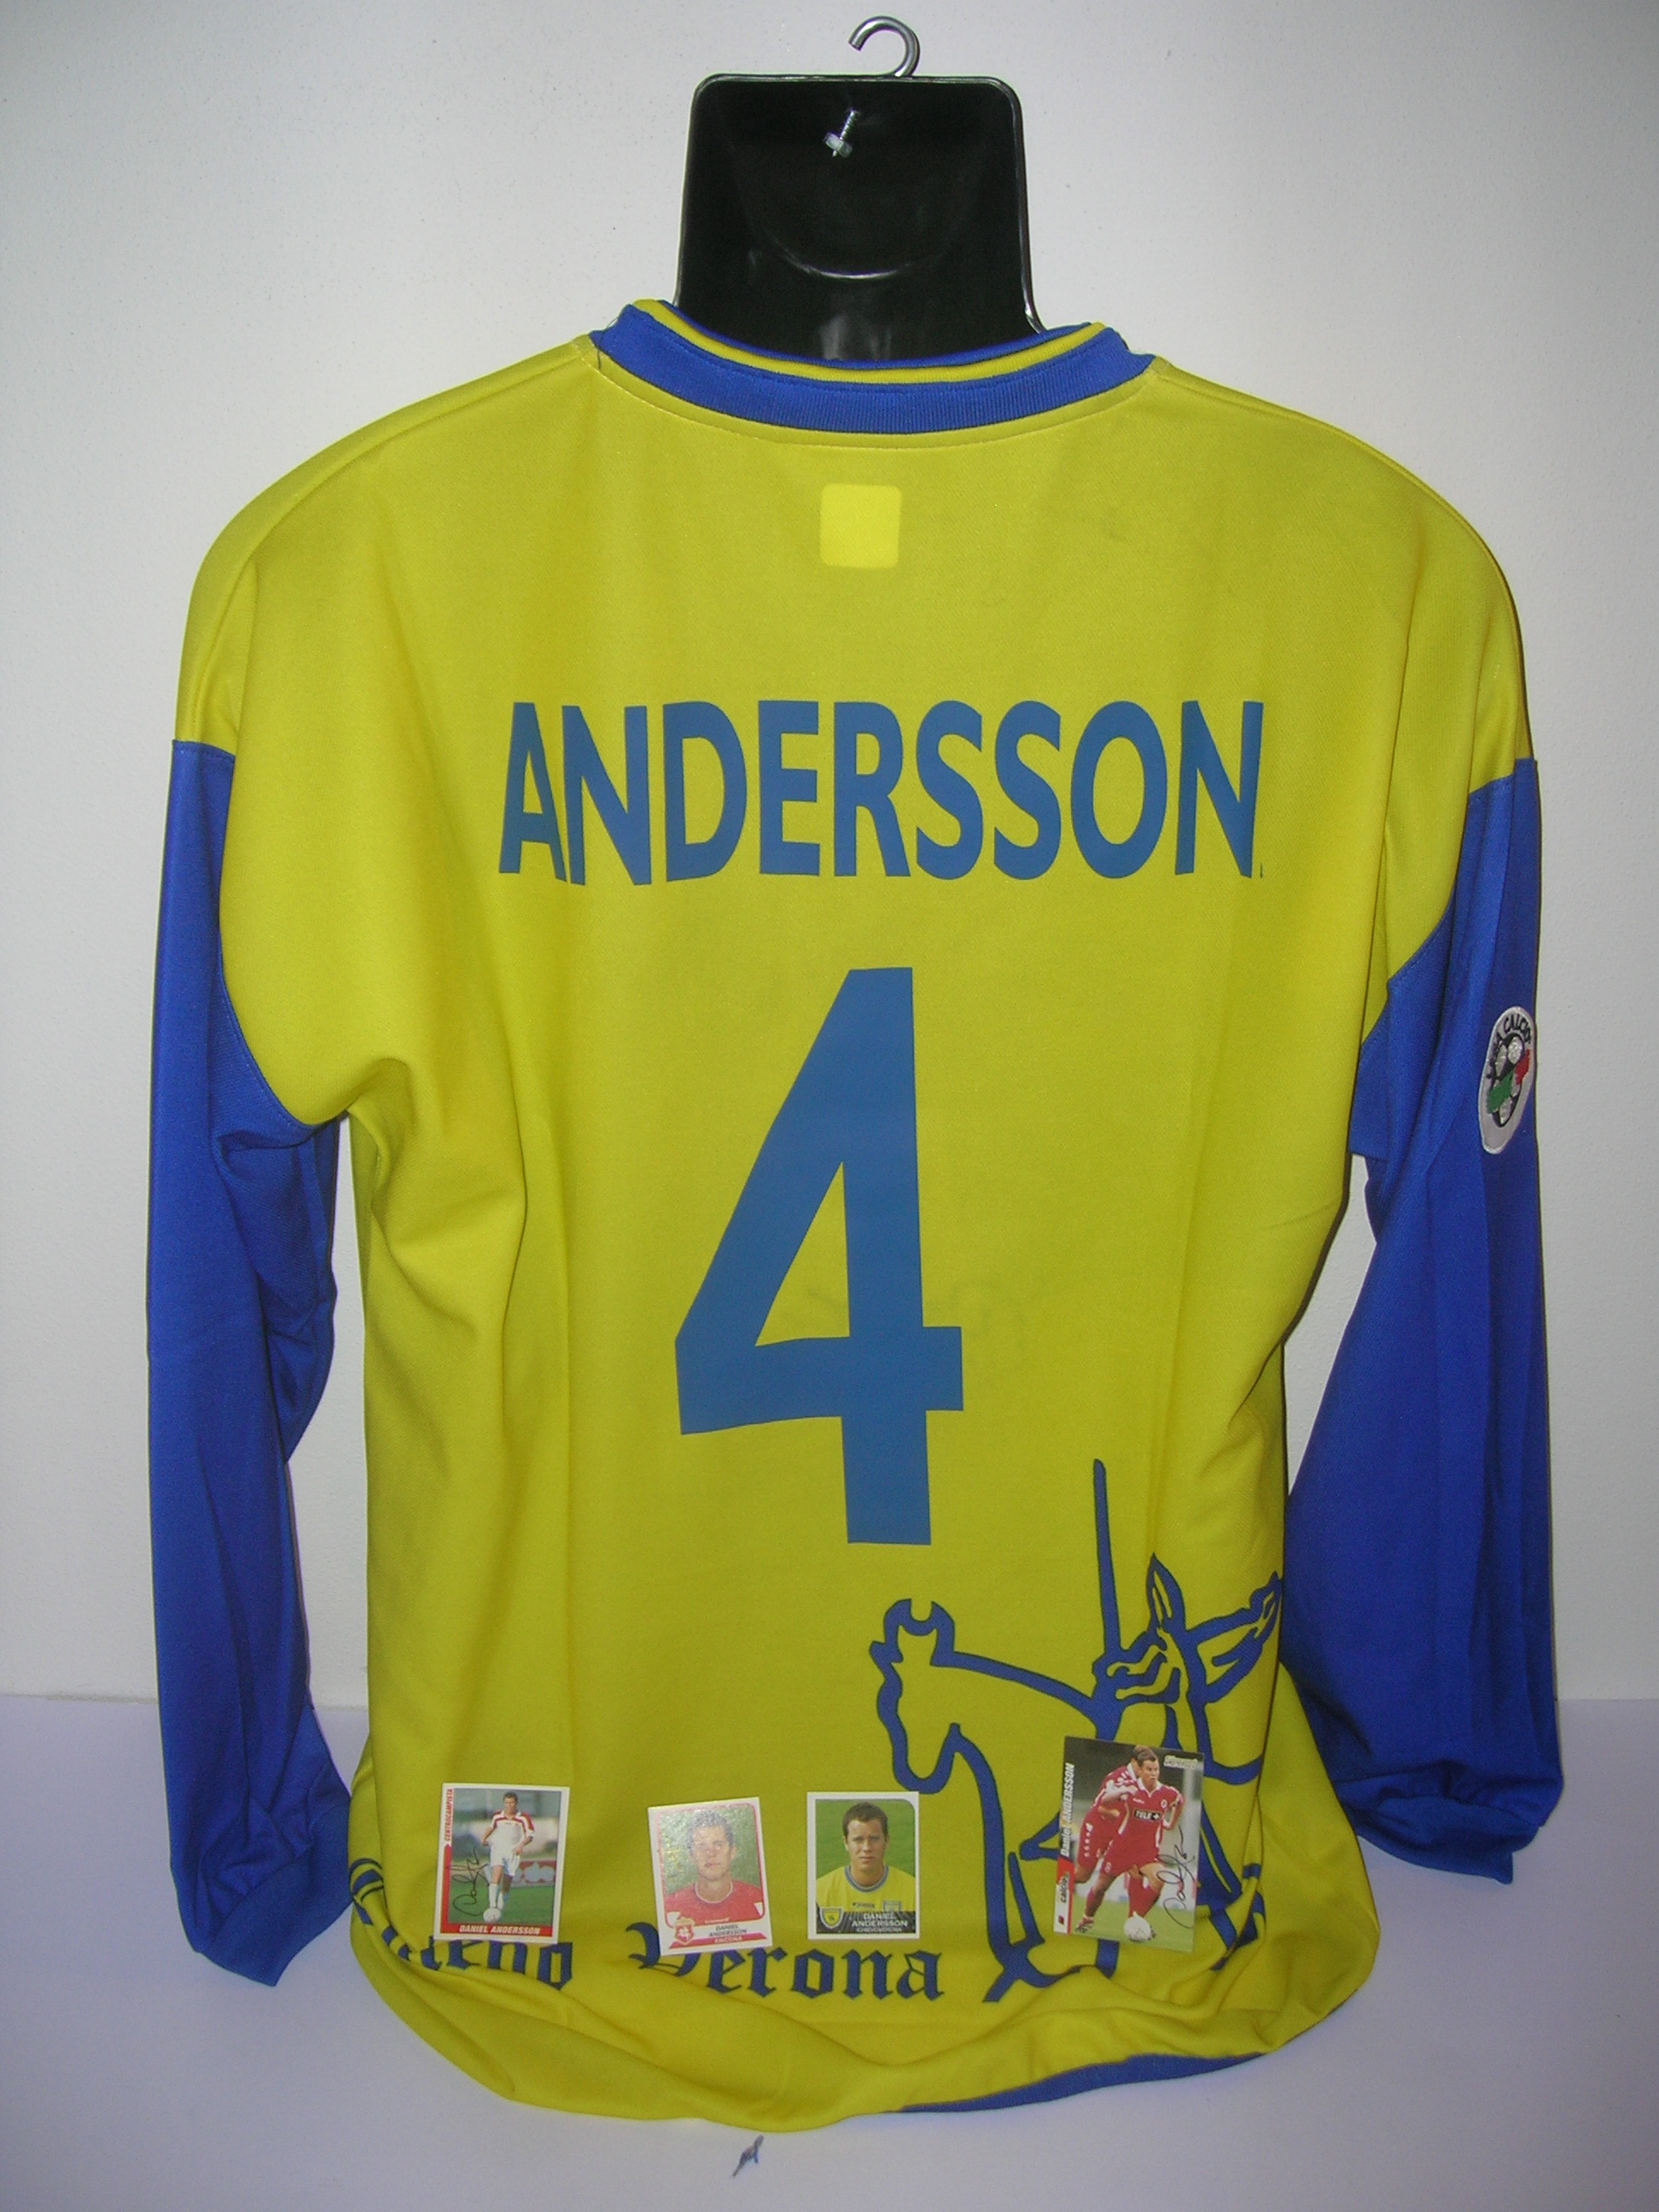 Chievo  Verona  Andersson  B-2